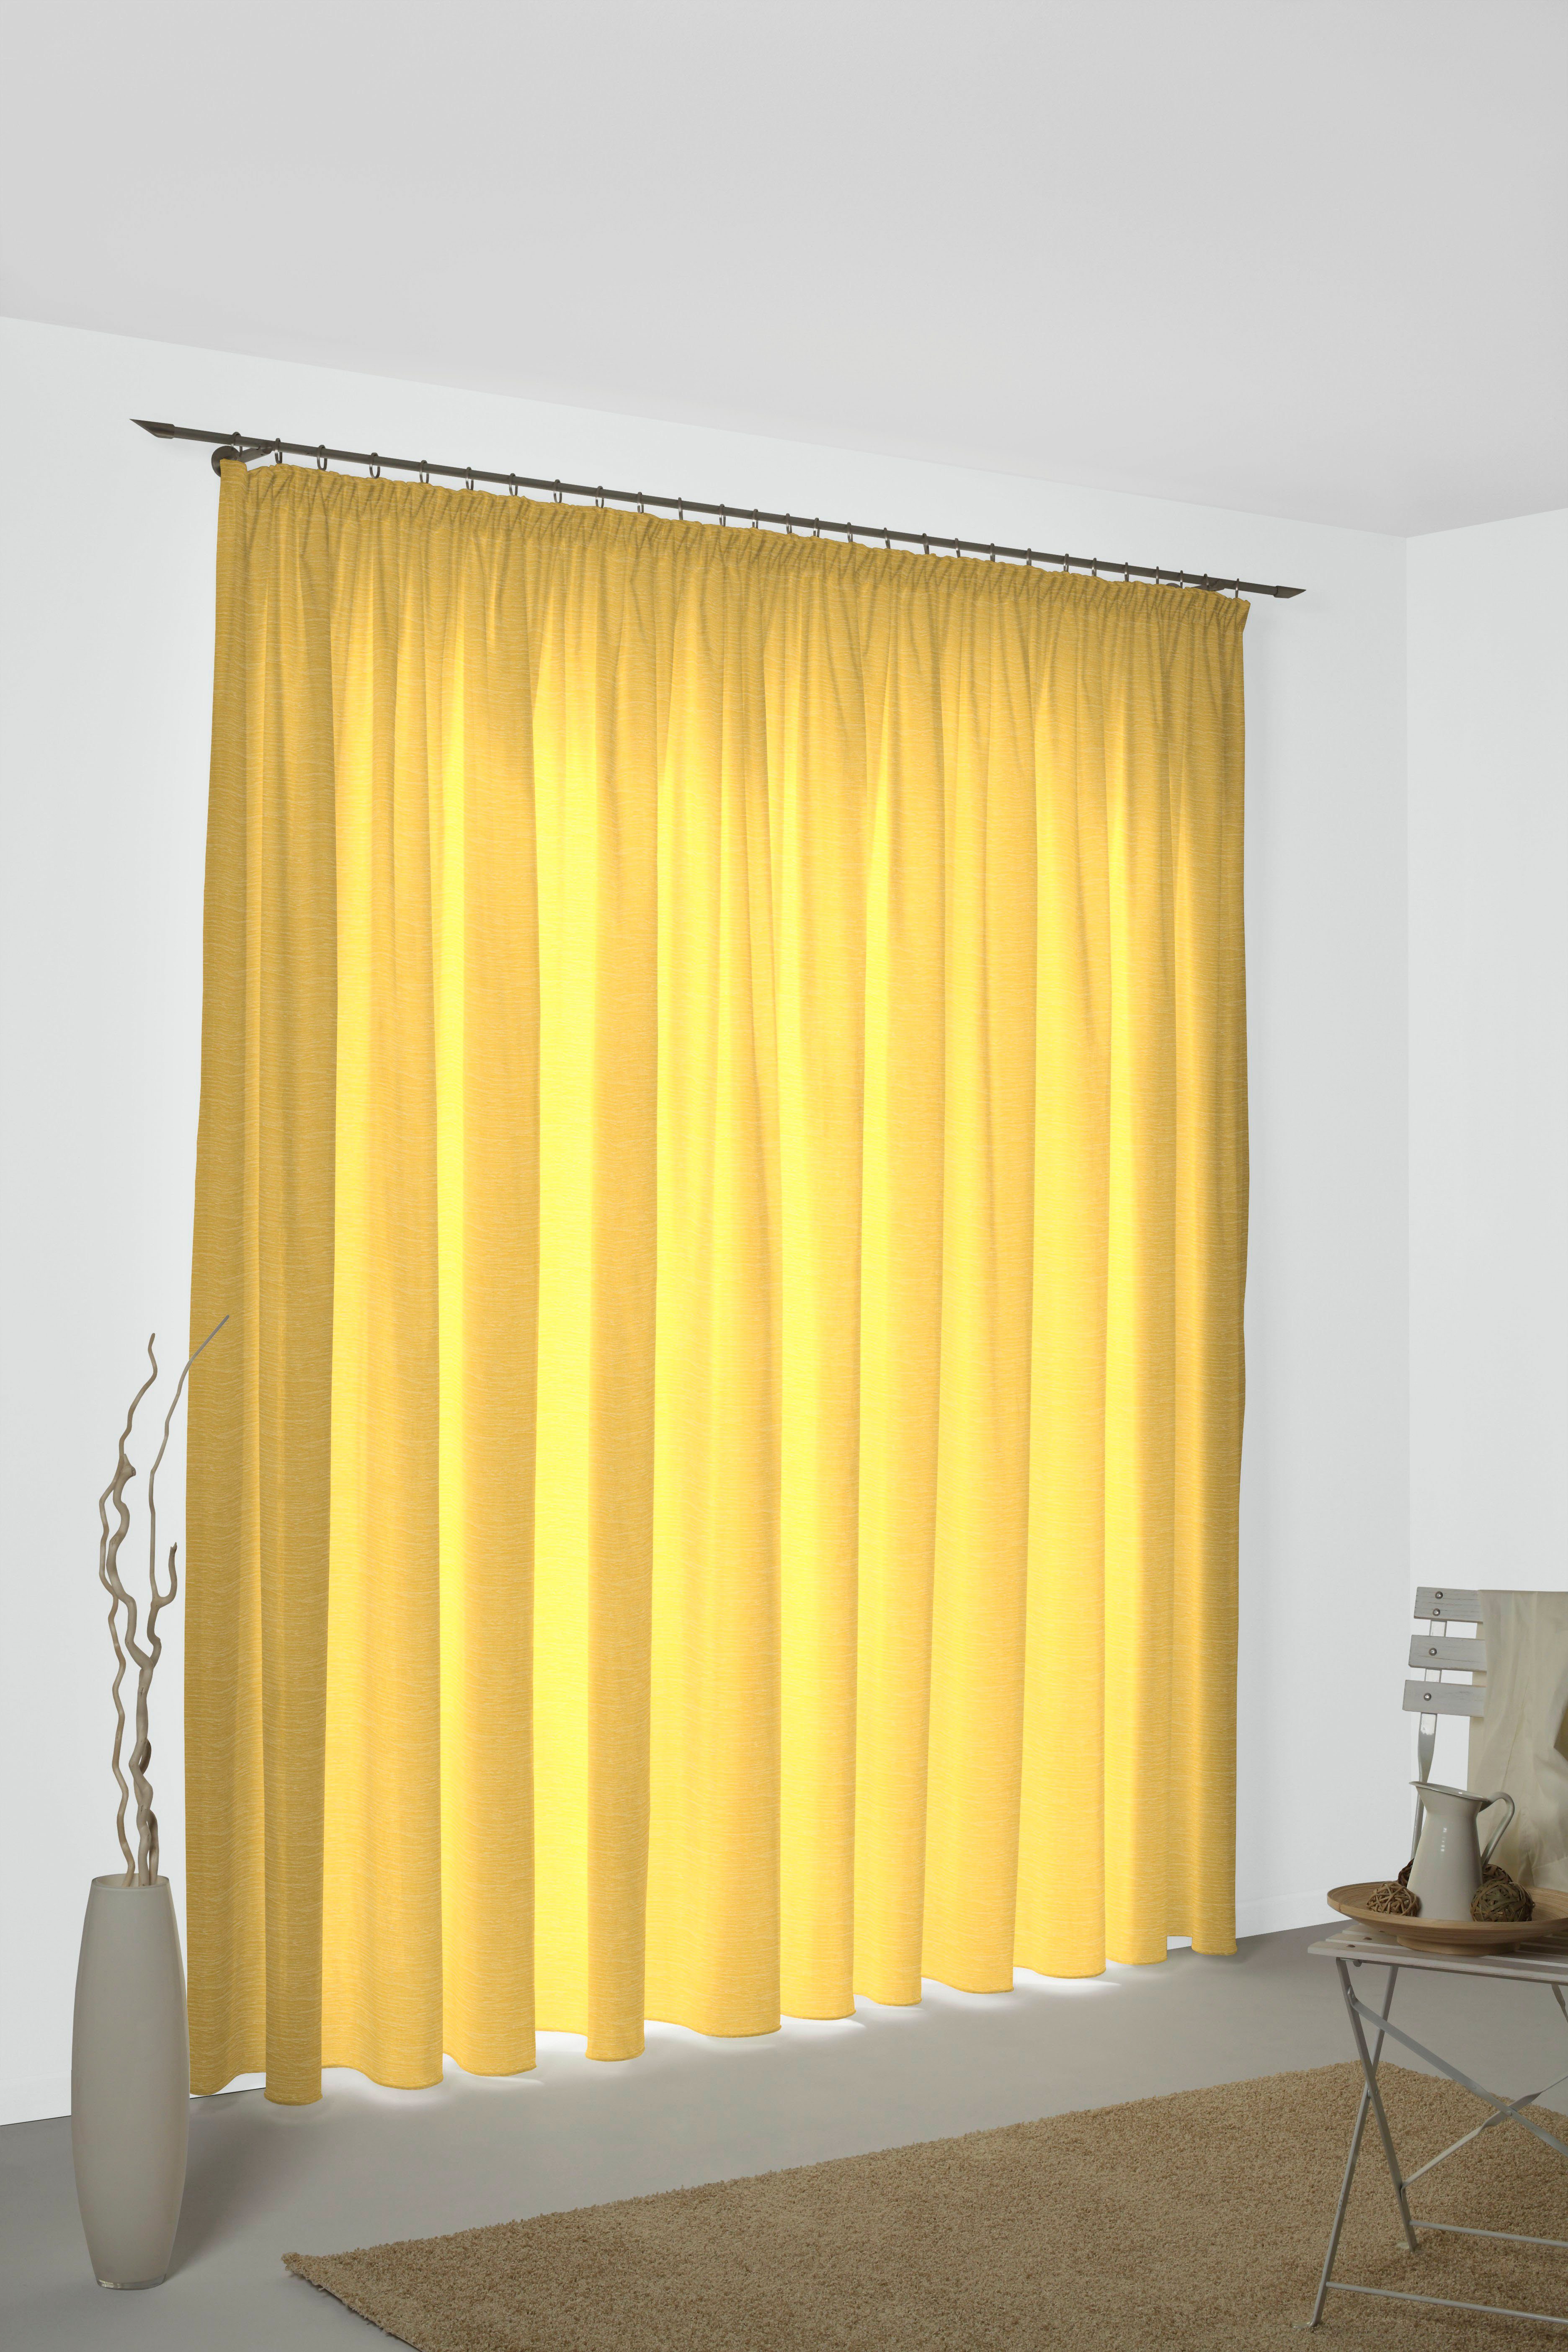 Vorhang (1 Bachfeld, Jacquard St), Multifunktionsband gelb blickdicht, Wirth,